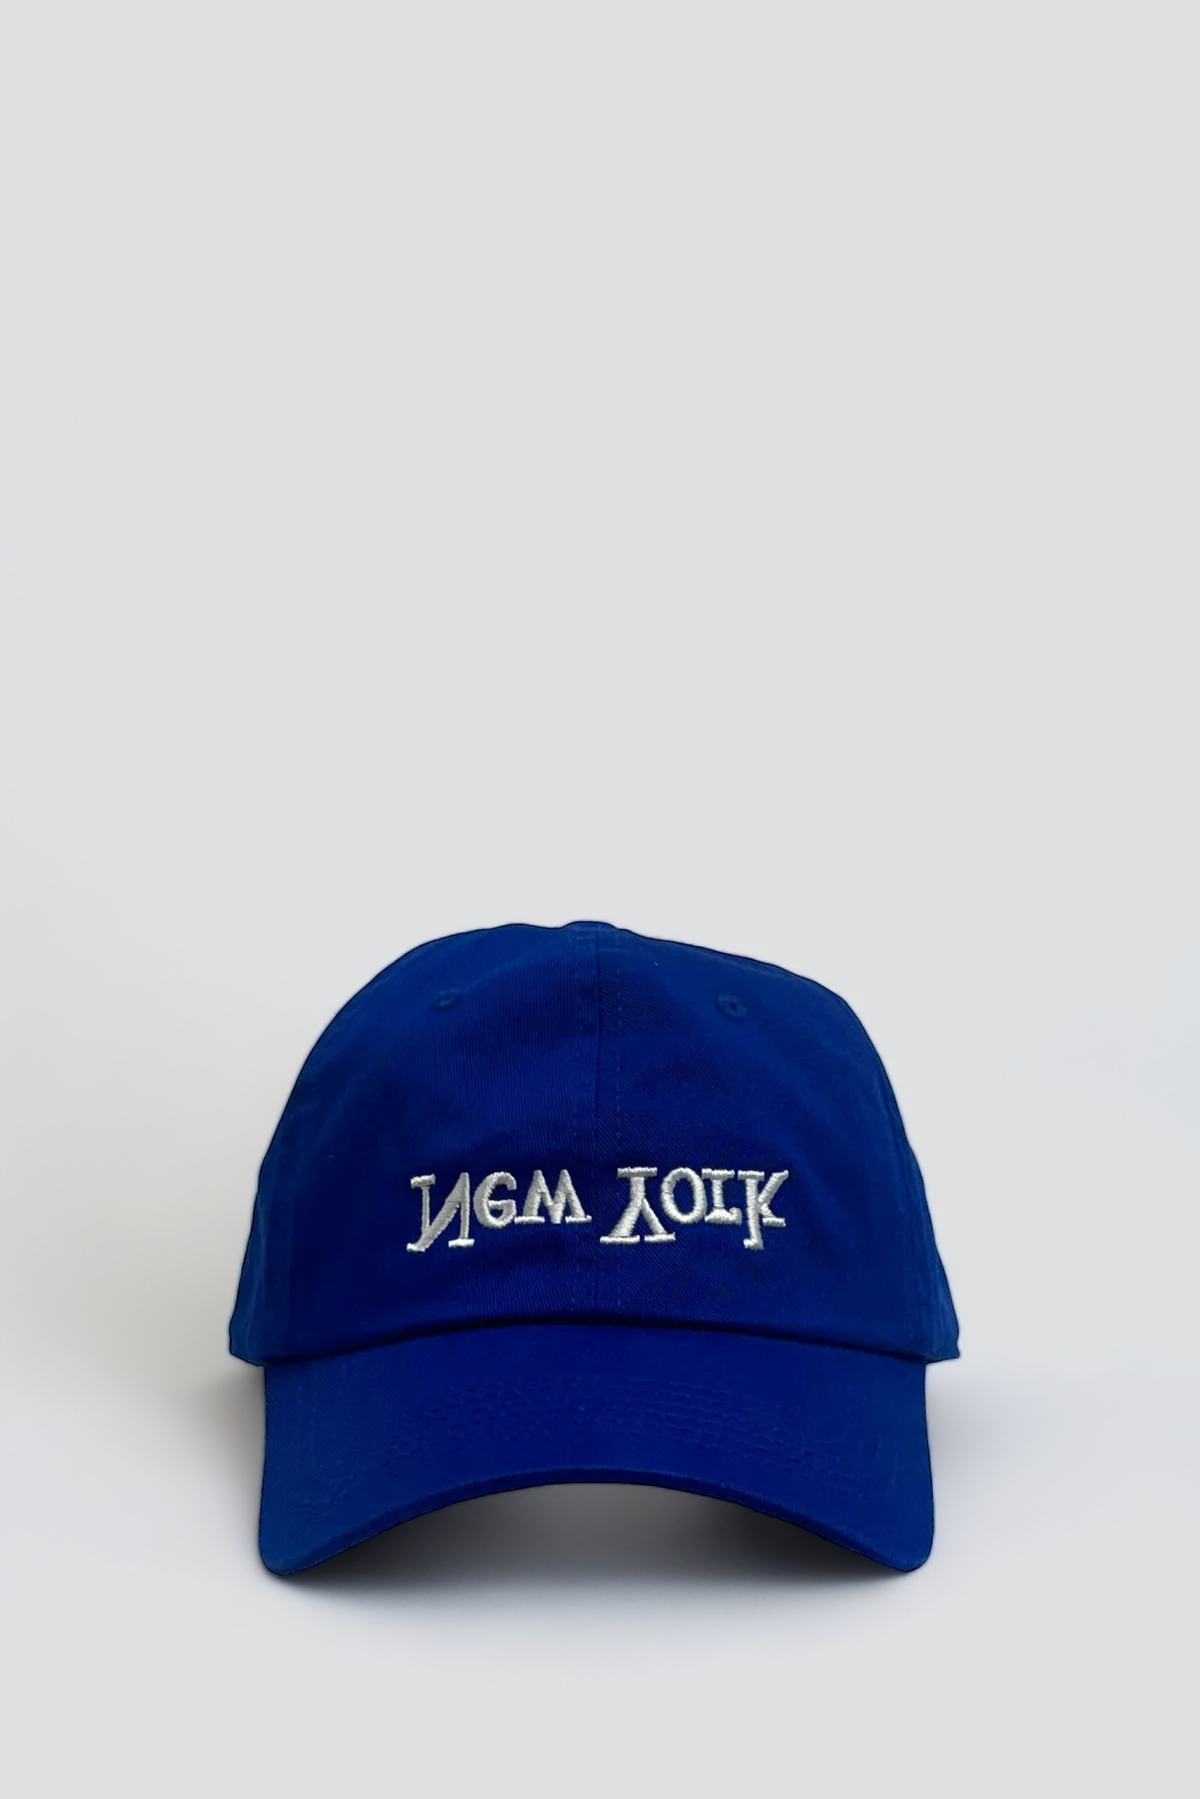 New York Embroidered Hat - Cobalt Blue/White